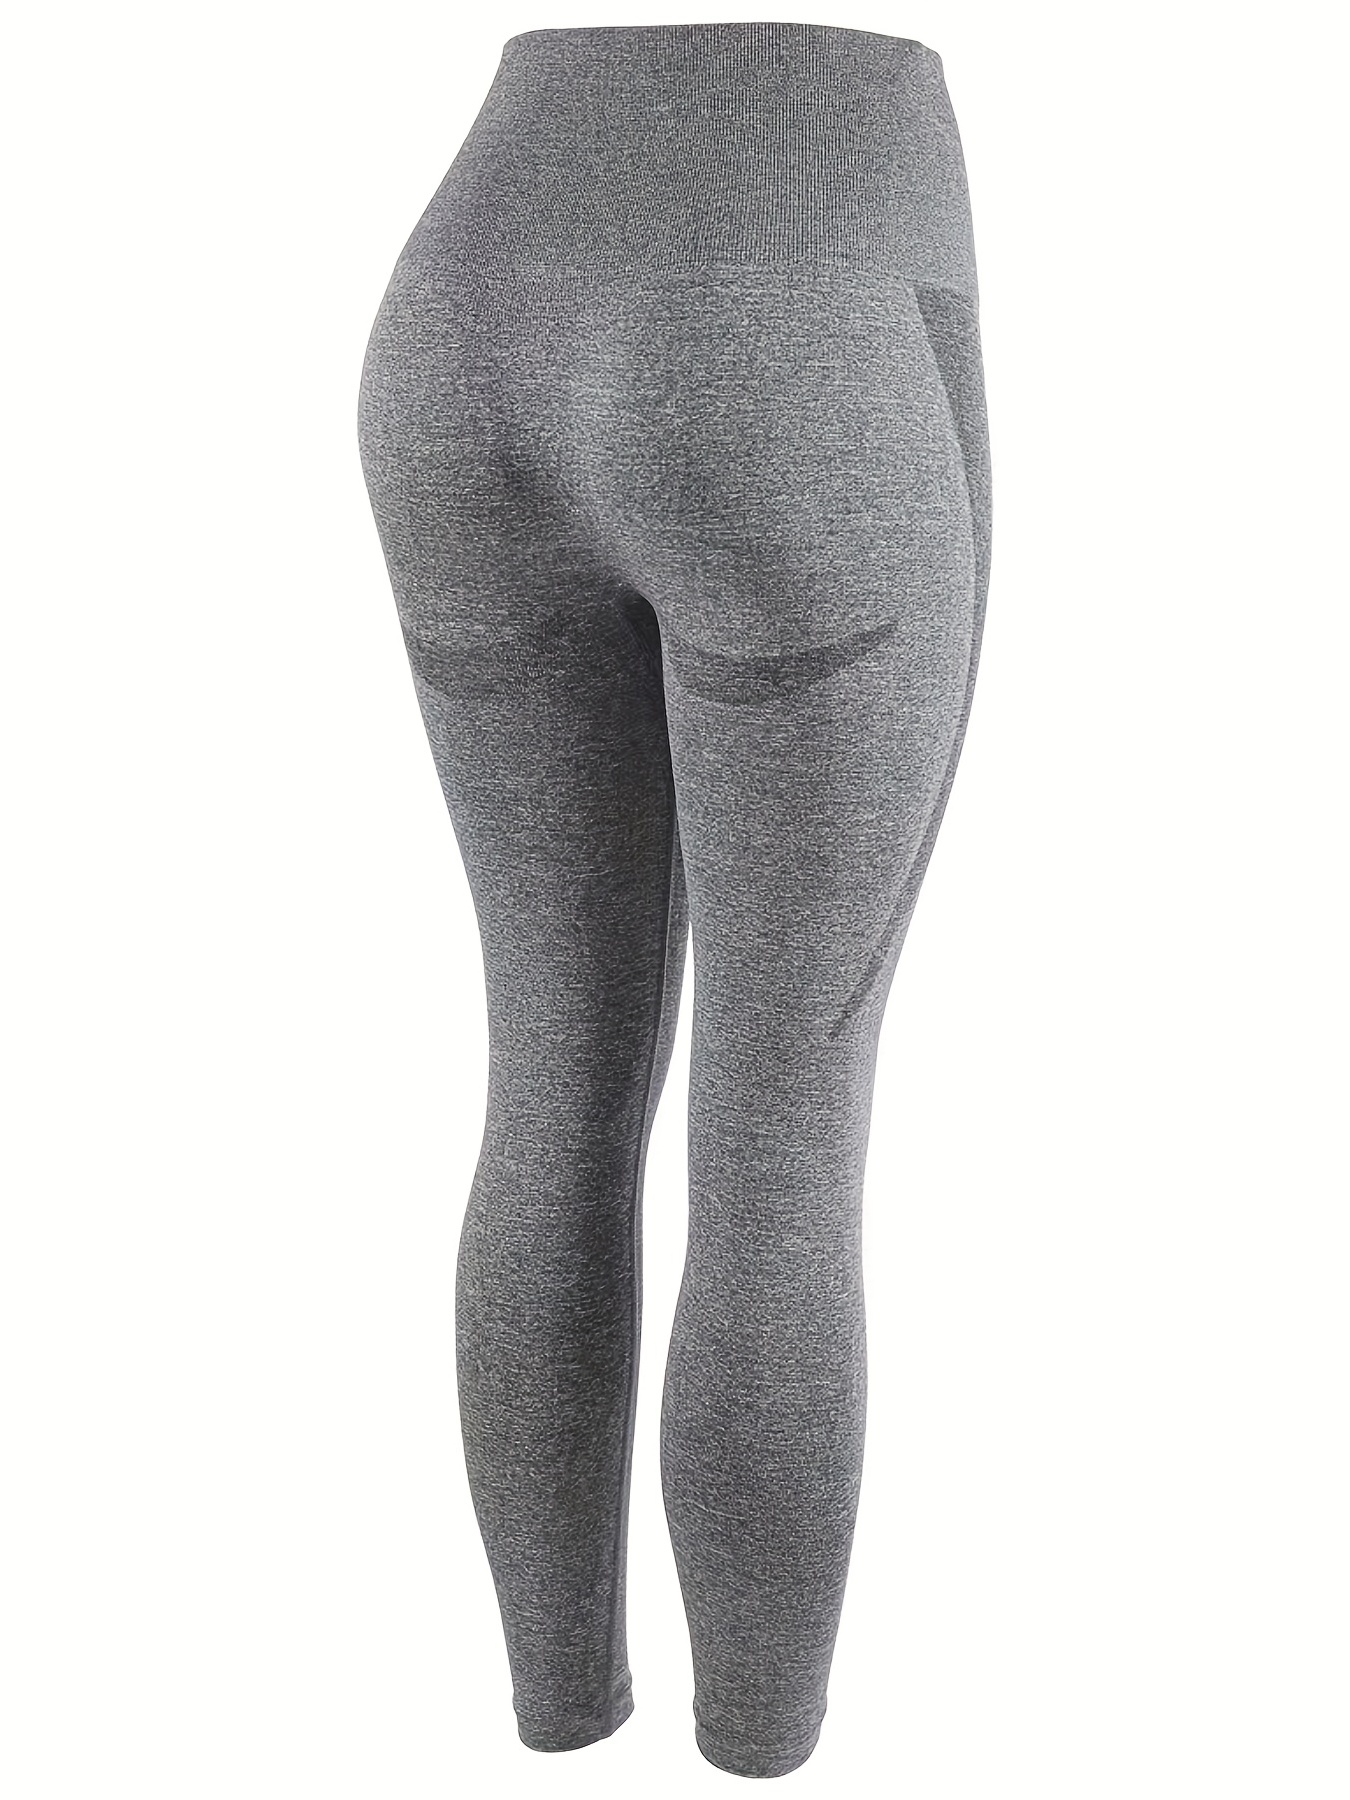  UXZDX Tie Dye Anti-Cellulite Sports Leggings Women No Camel  Toe Squatproof Yoga Pants Naked Back Workout Gym Leggings (Size : Medium) :  Sports & Outdoors